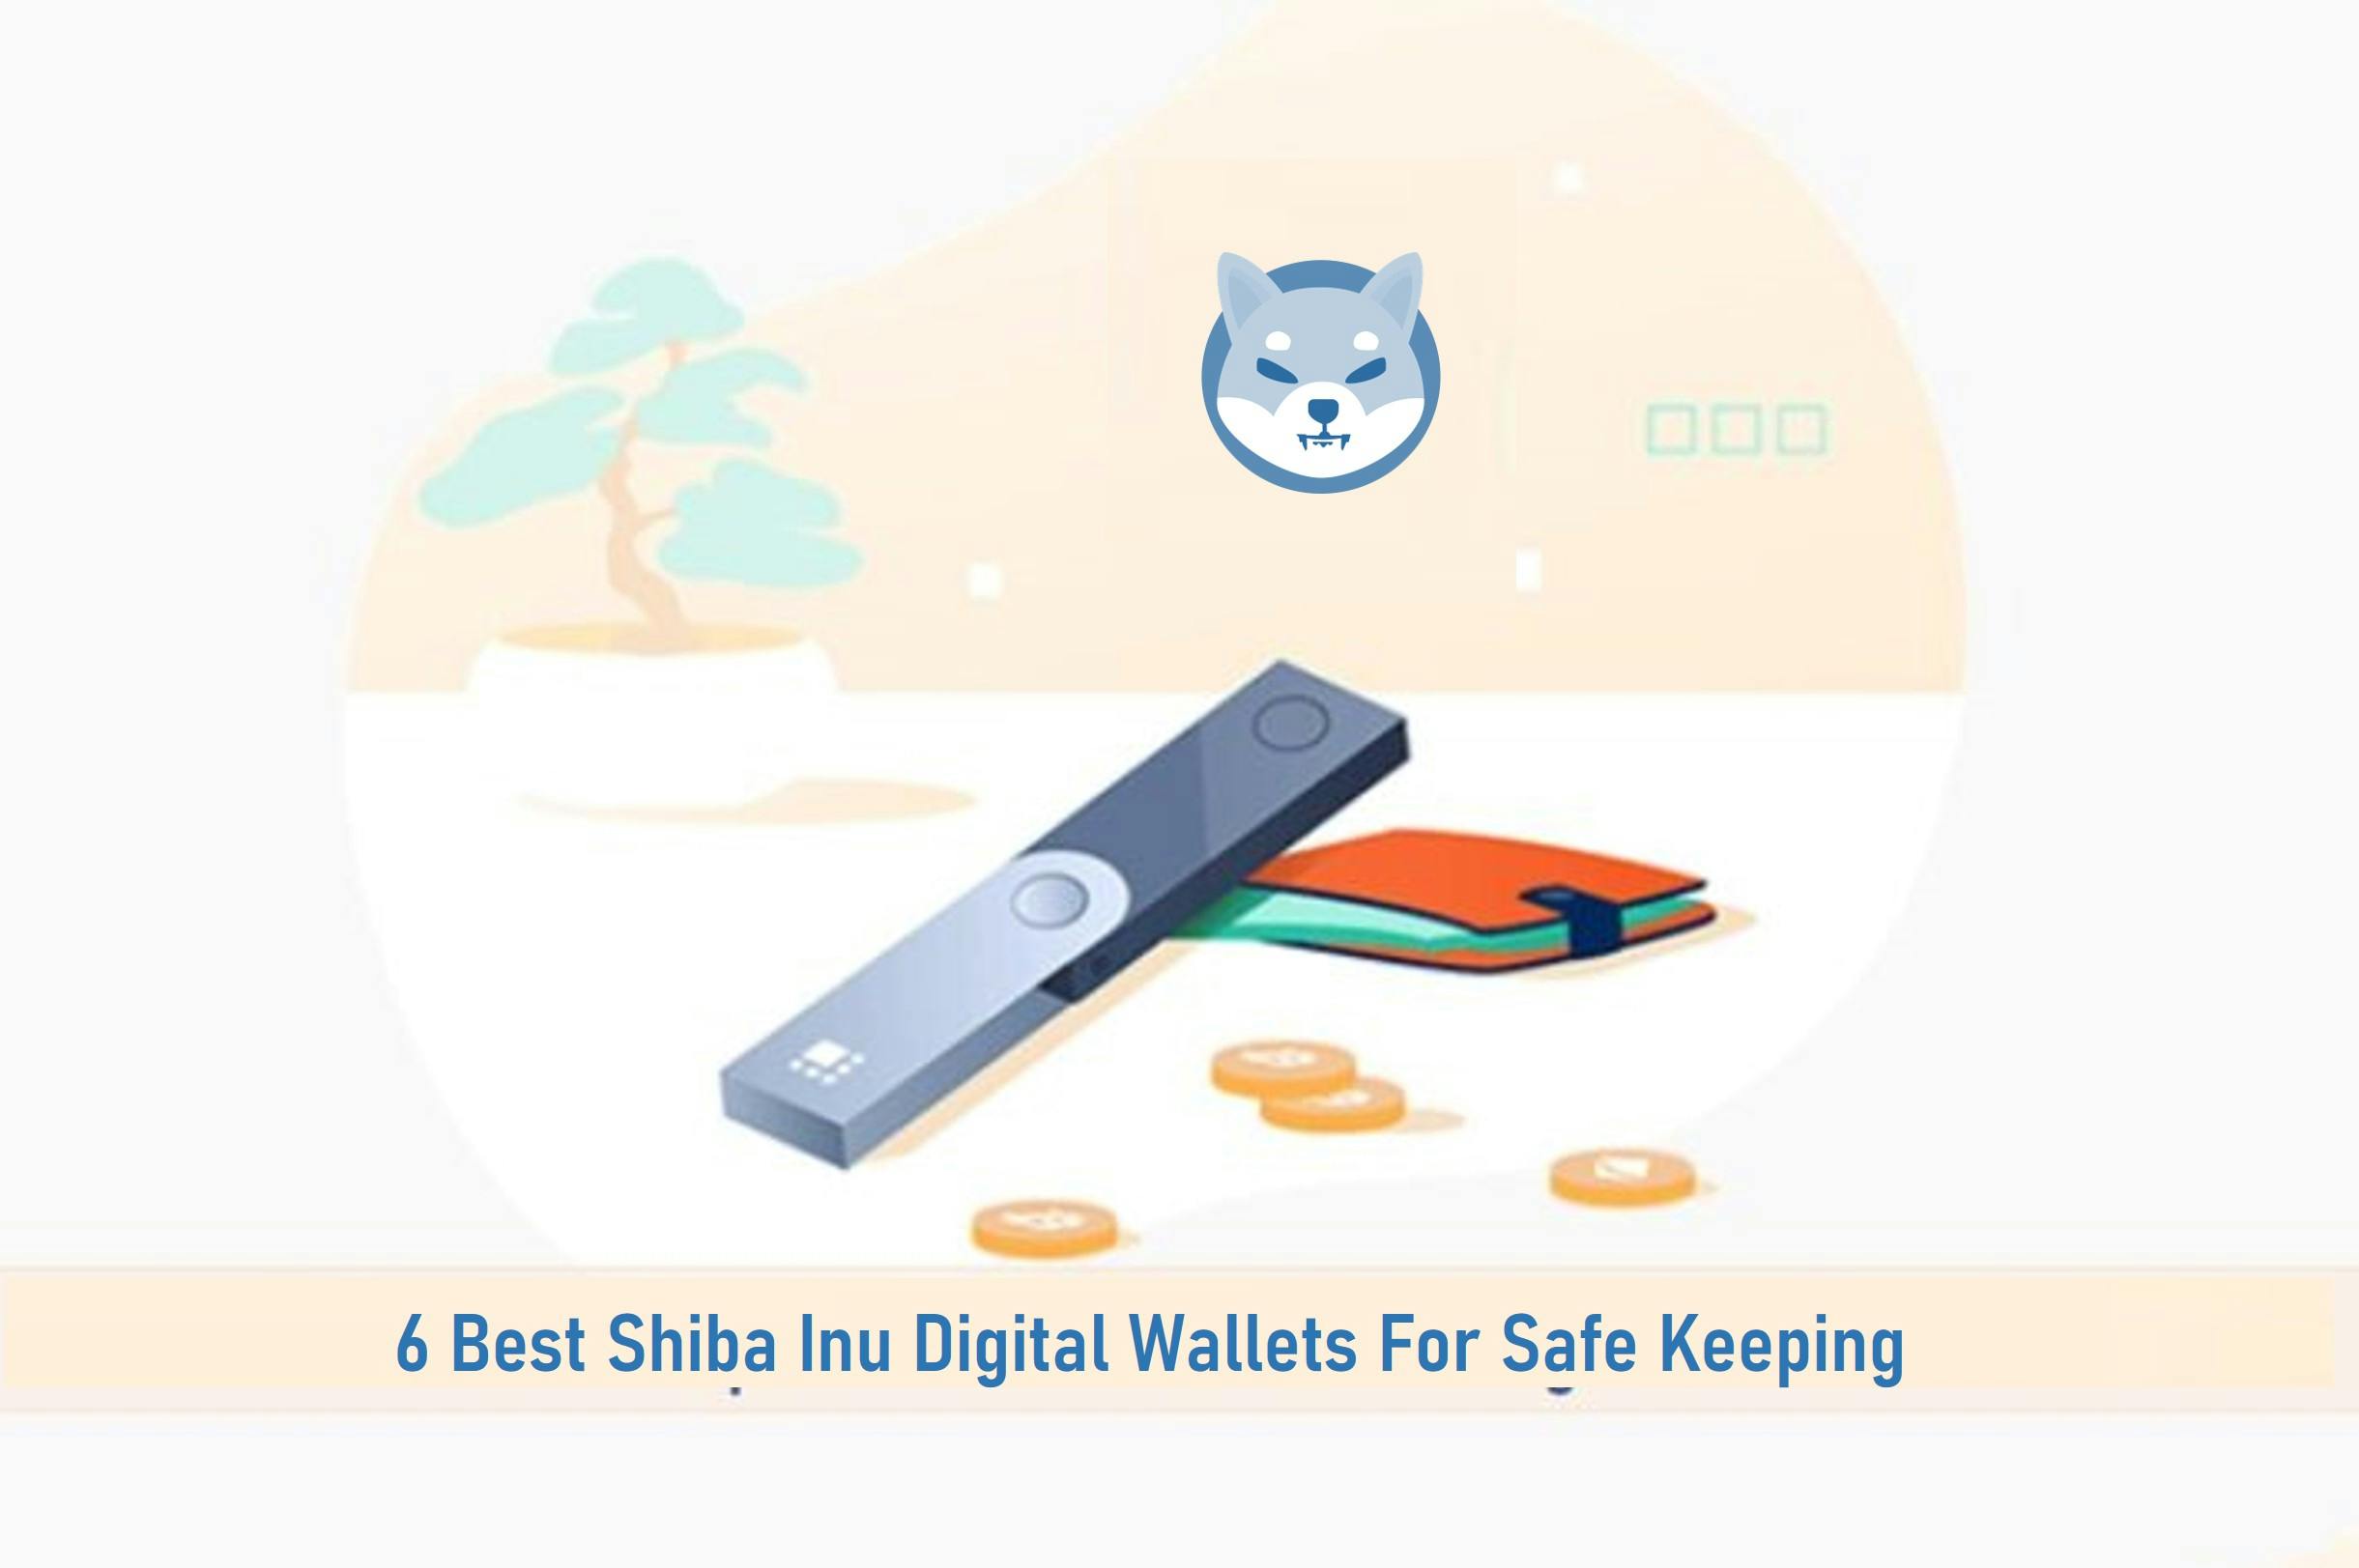 6 Best Digital Wallets For Shiba Inu for Safe Keeping